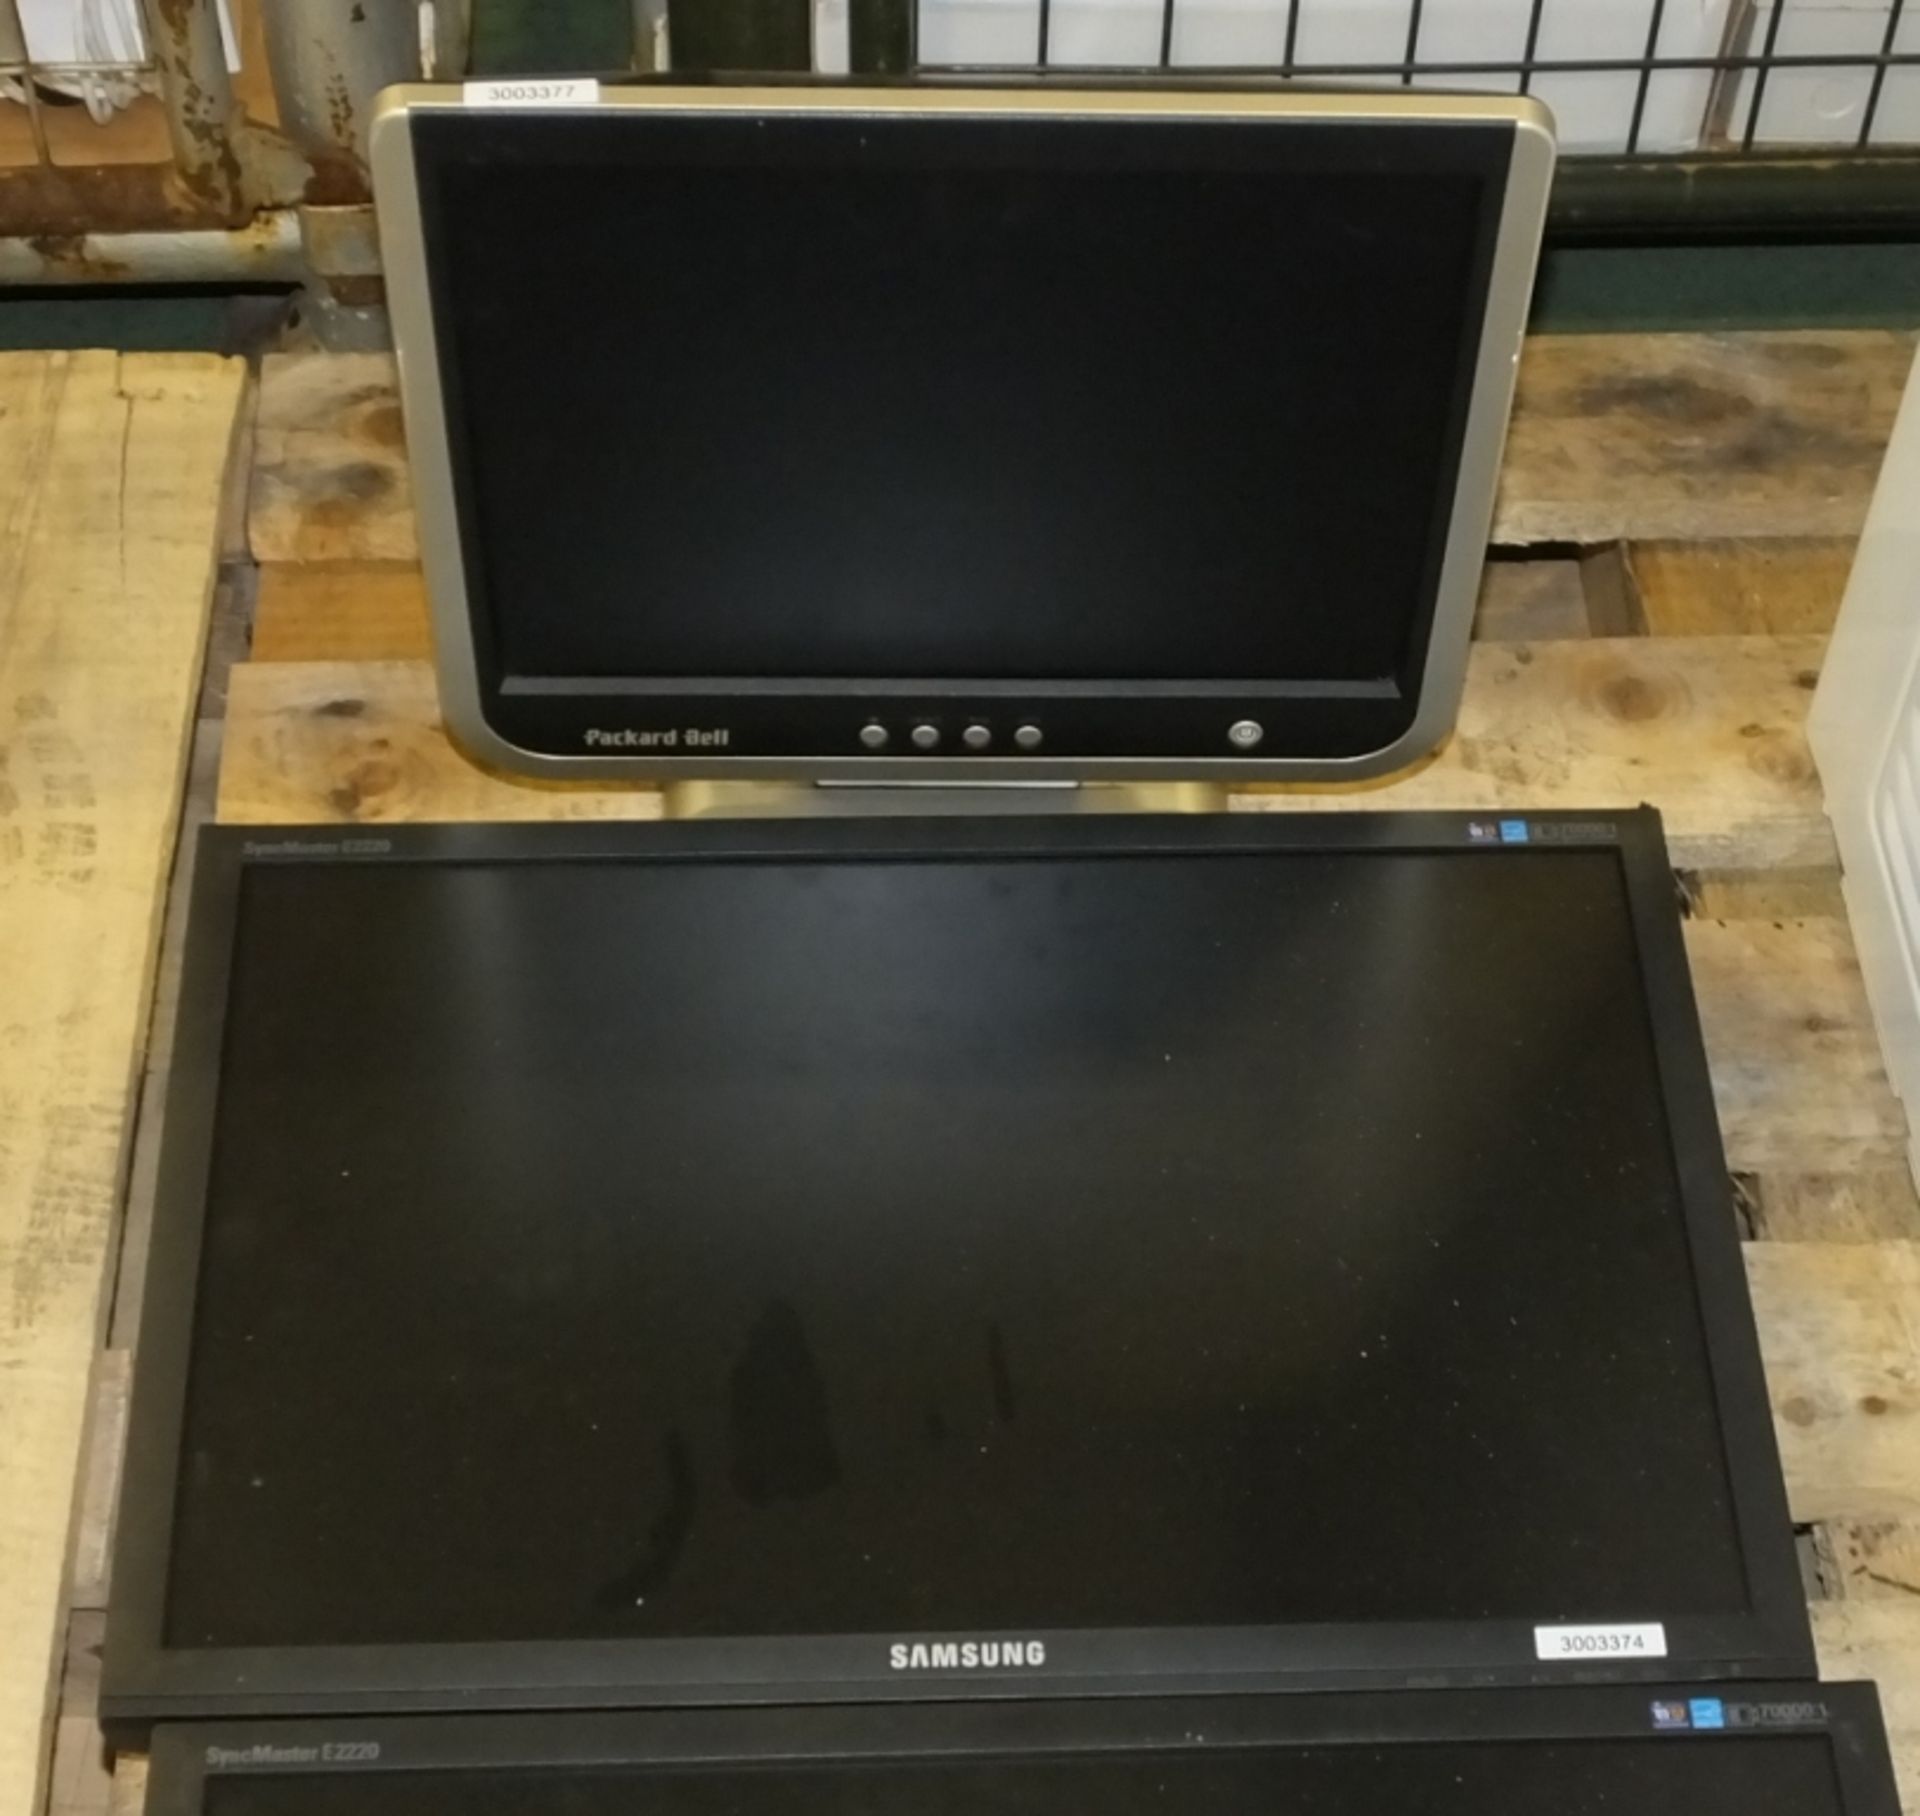 2x Samsung E2220NW Monitors, Parkard Bell FT500 Monitor - Image 3 of 3